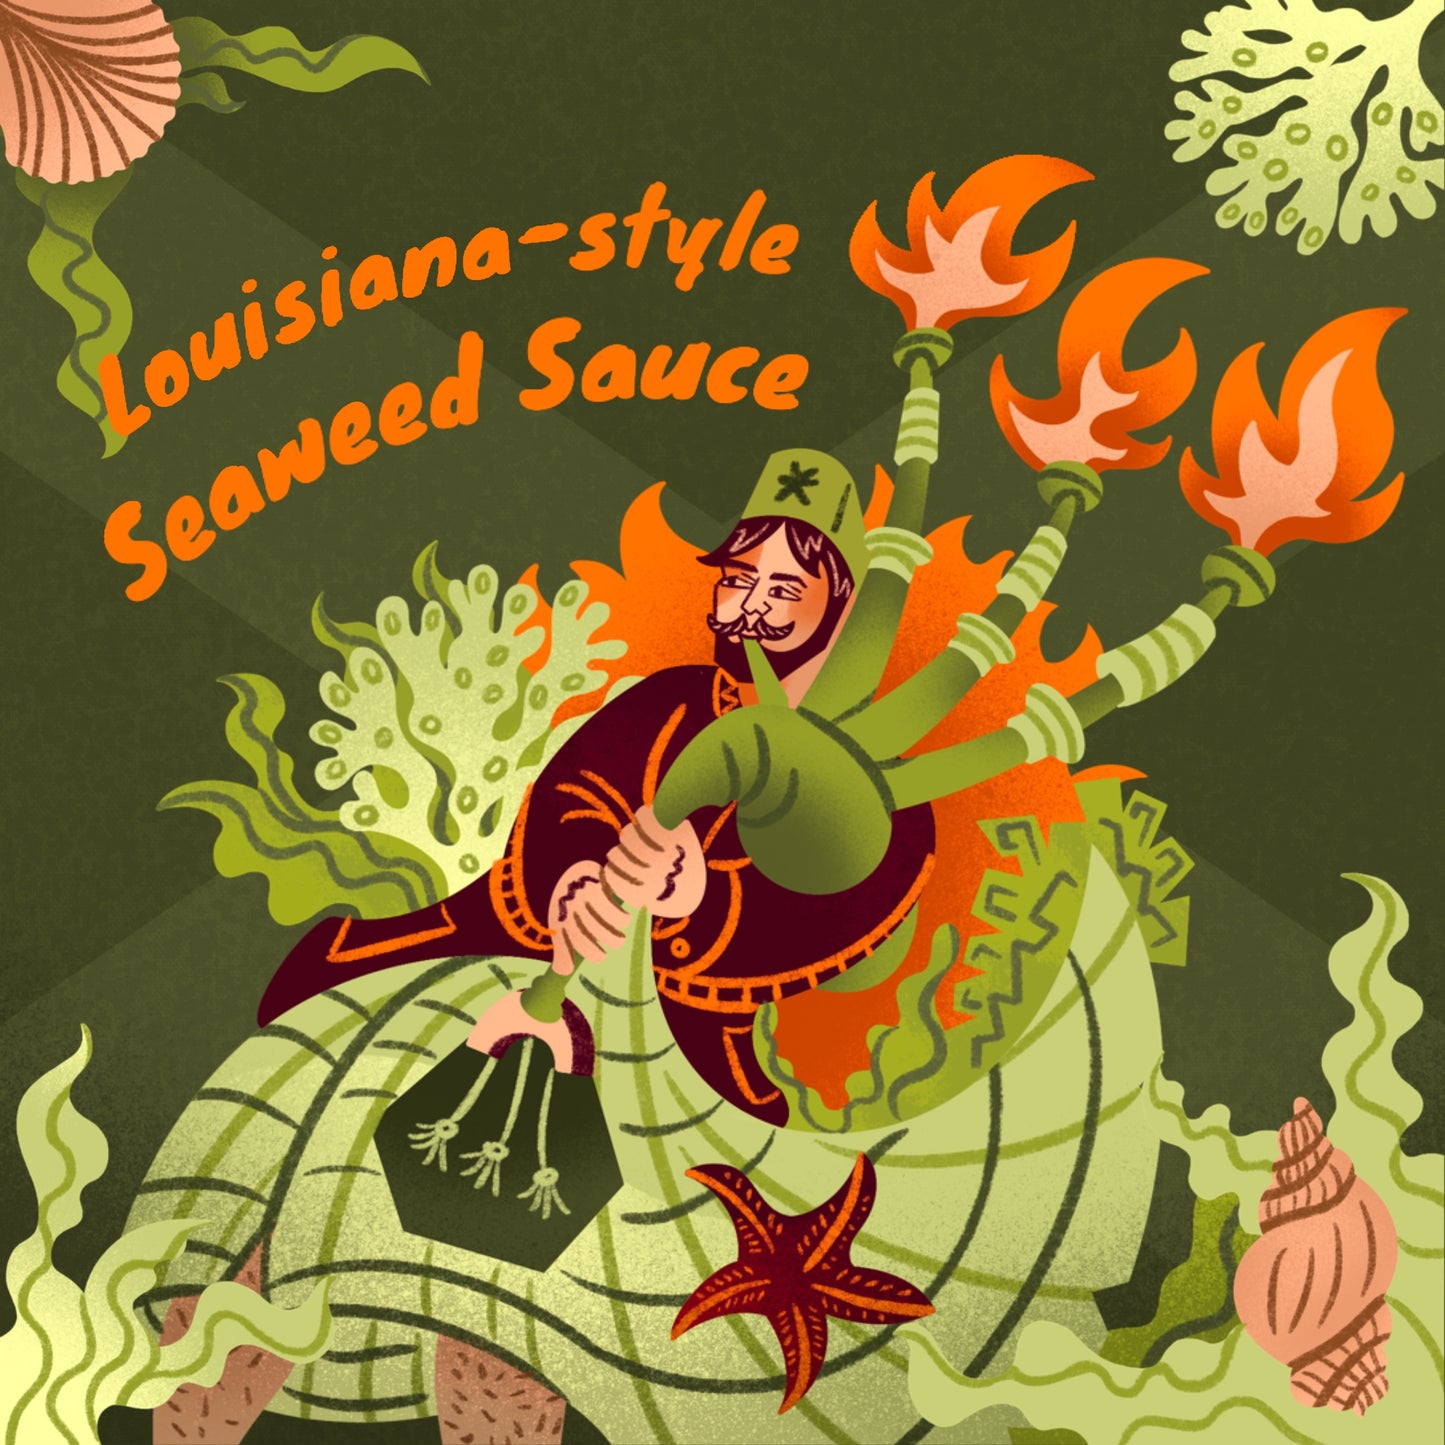 Lousiana-Style Seaweed Sauce